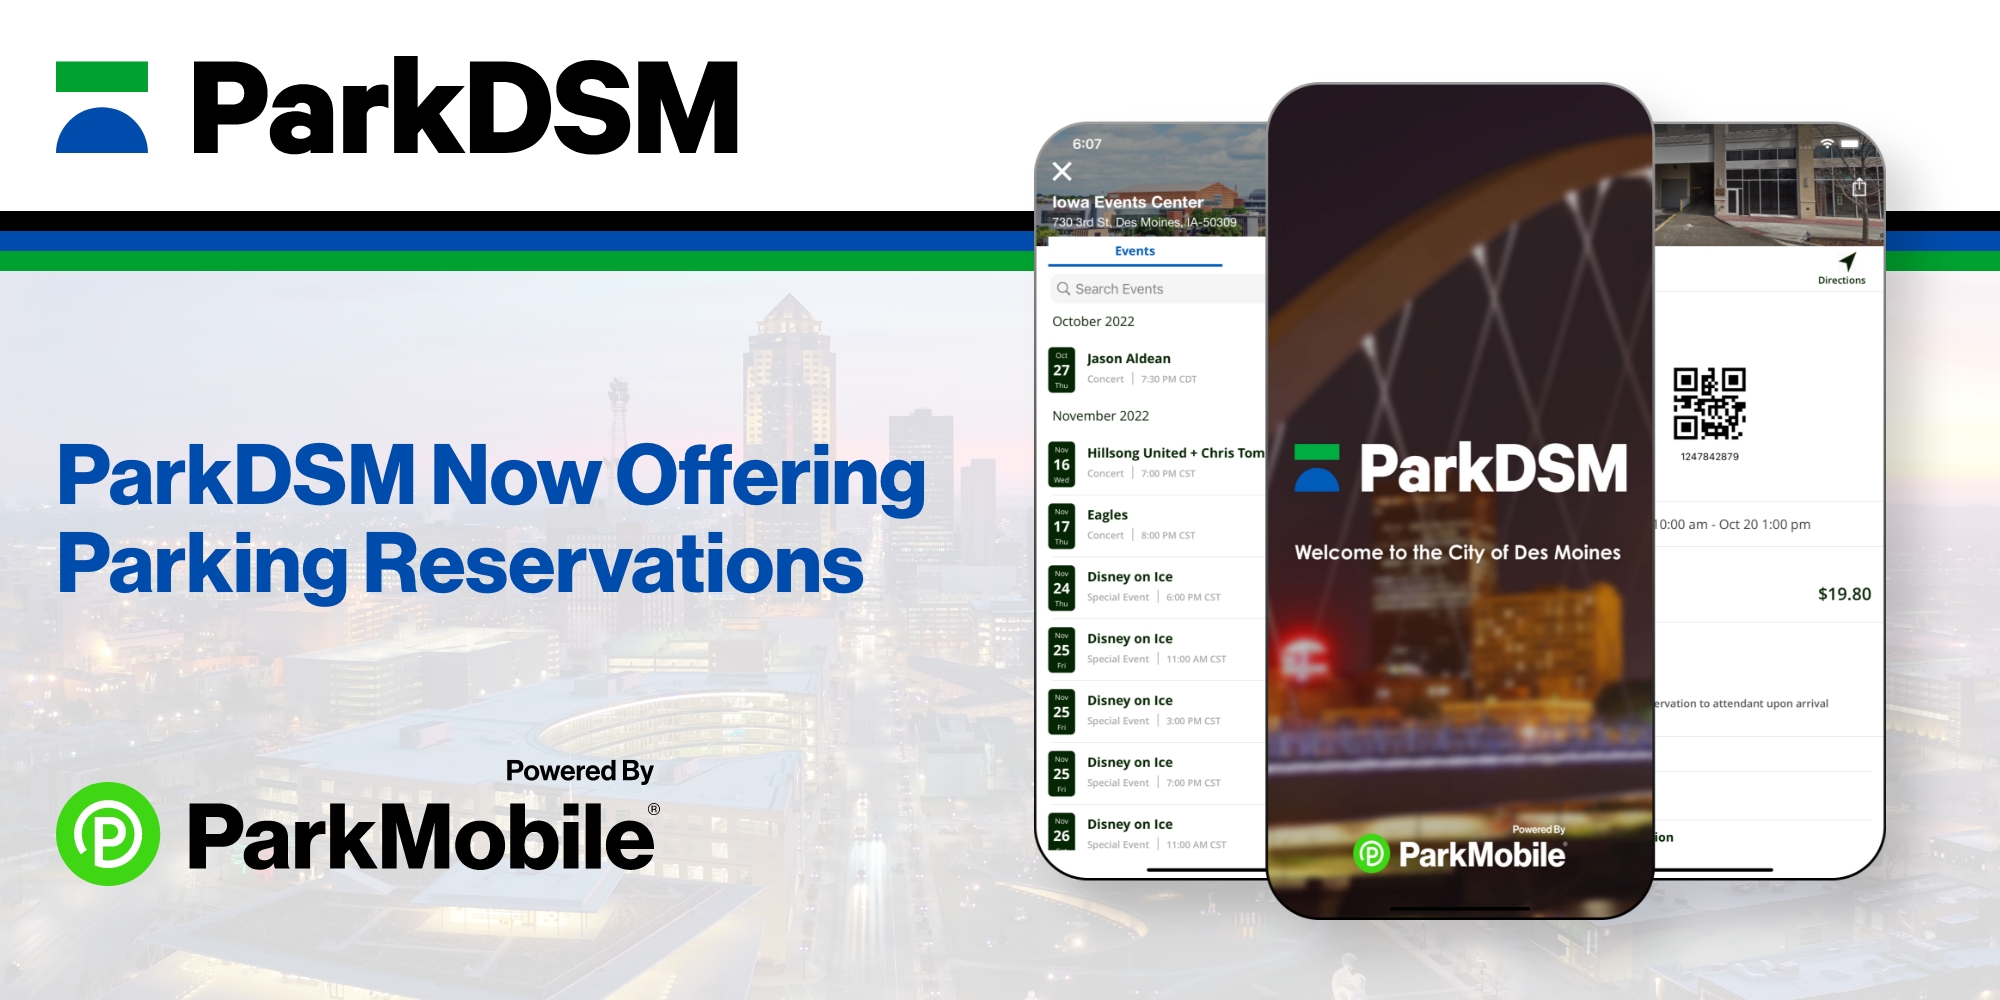 ParkDSM, Des Moines, Iowa’s, Parking App Powered by ParkMobile, Expands Partnership to Offer Parking Reservations